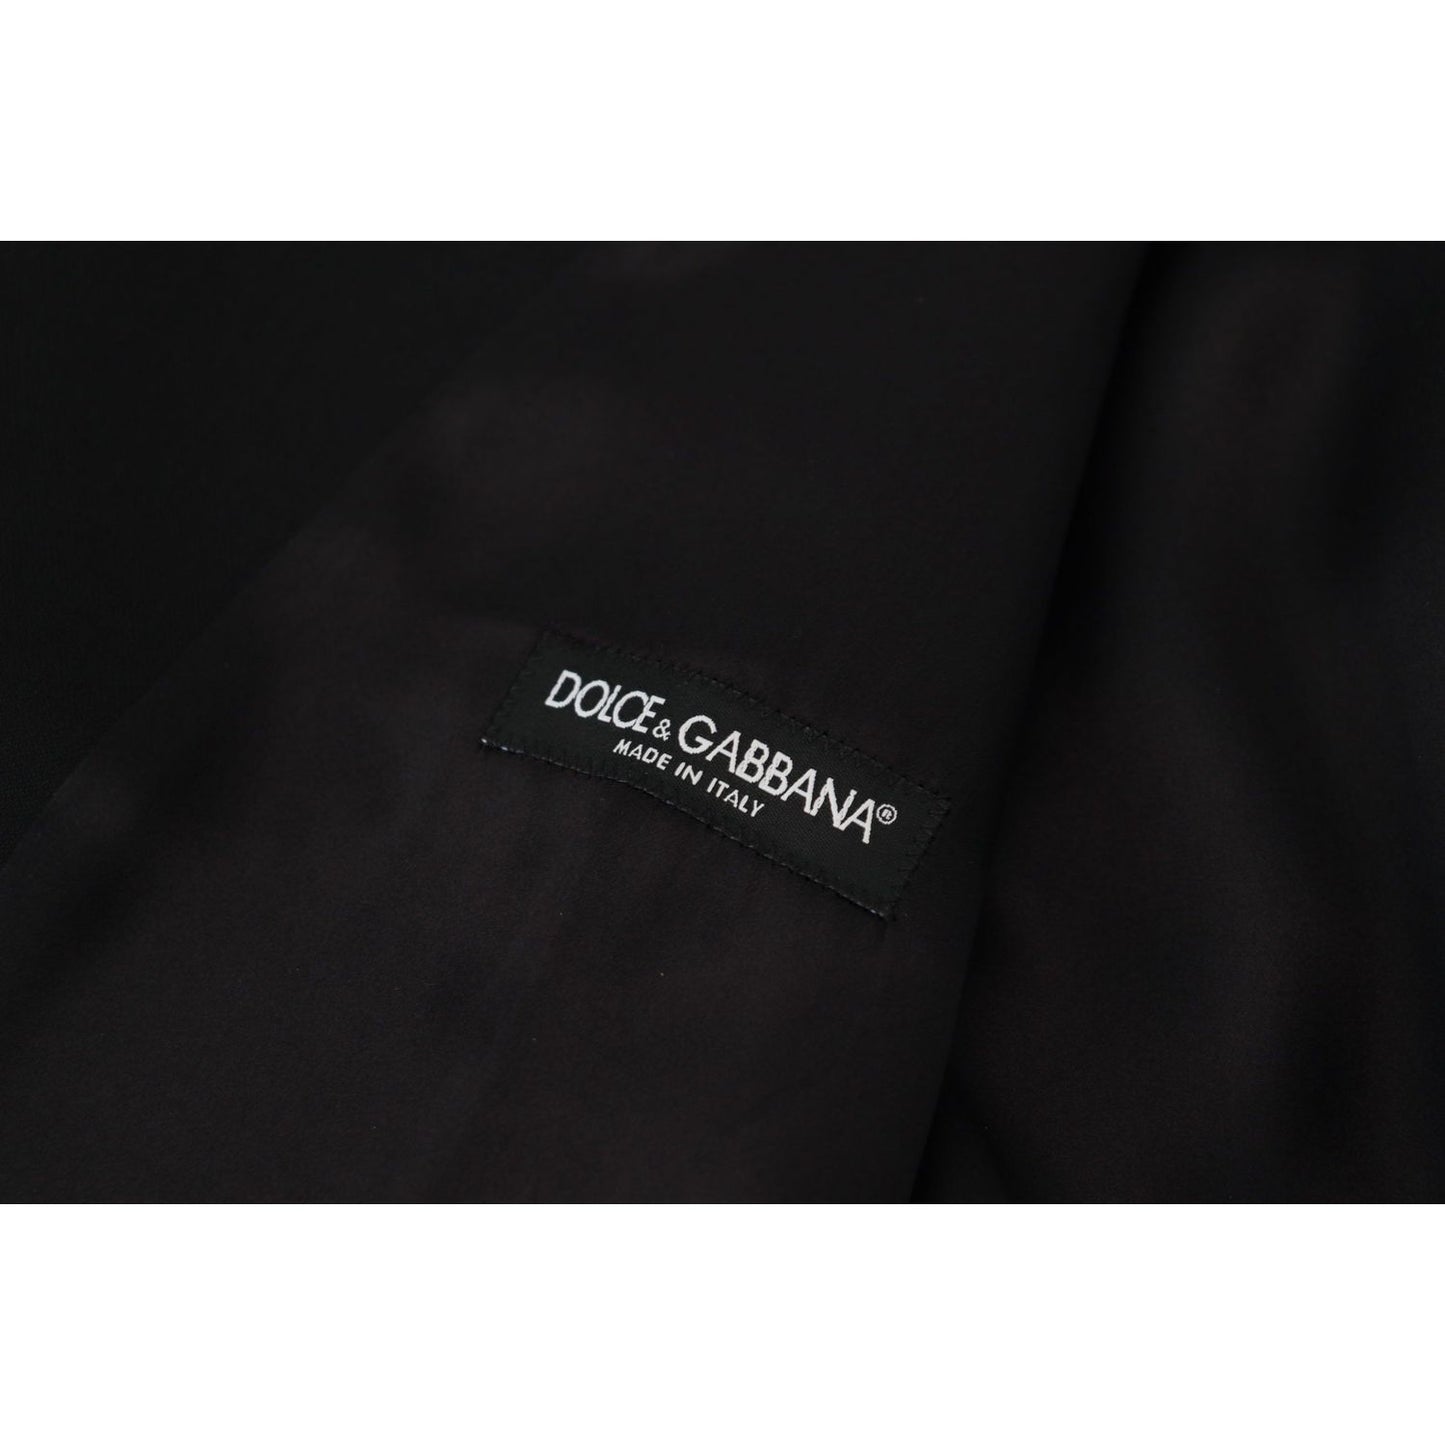 Dolce & Gabbana Elegant Black Single-Breasted Dress Vest black-virgin-wool-waistcoat-formal-dress-vest